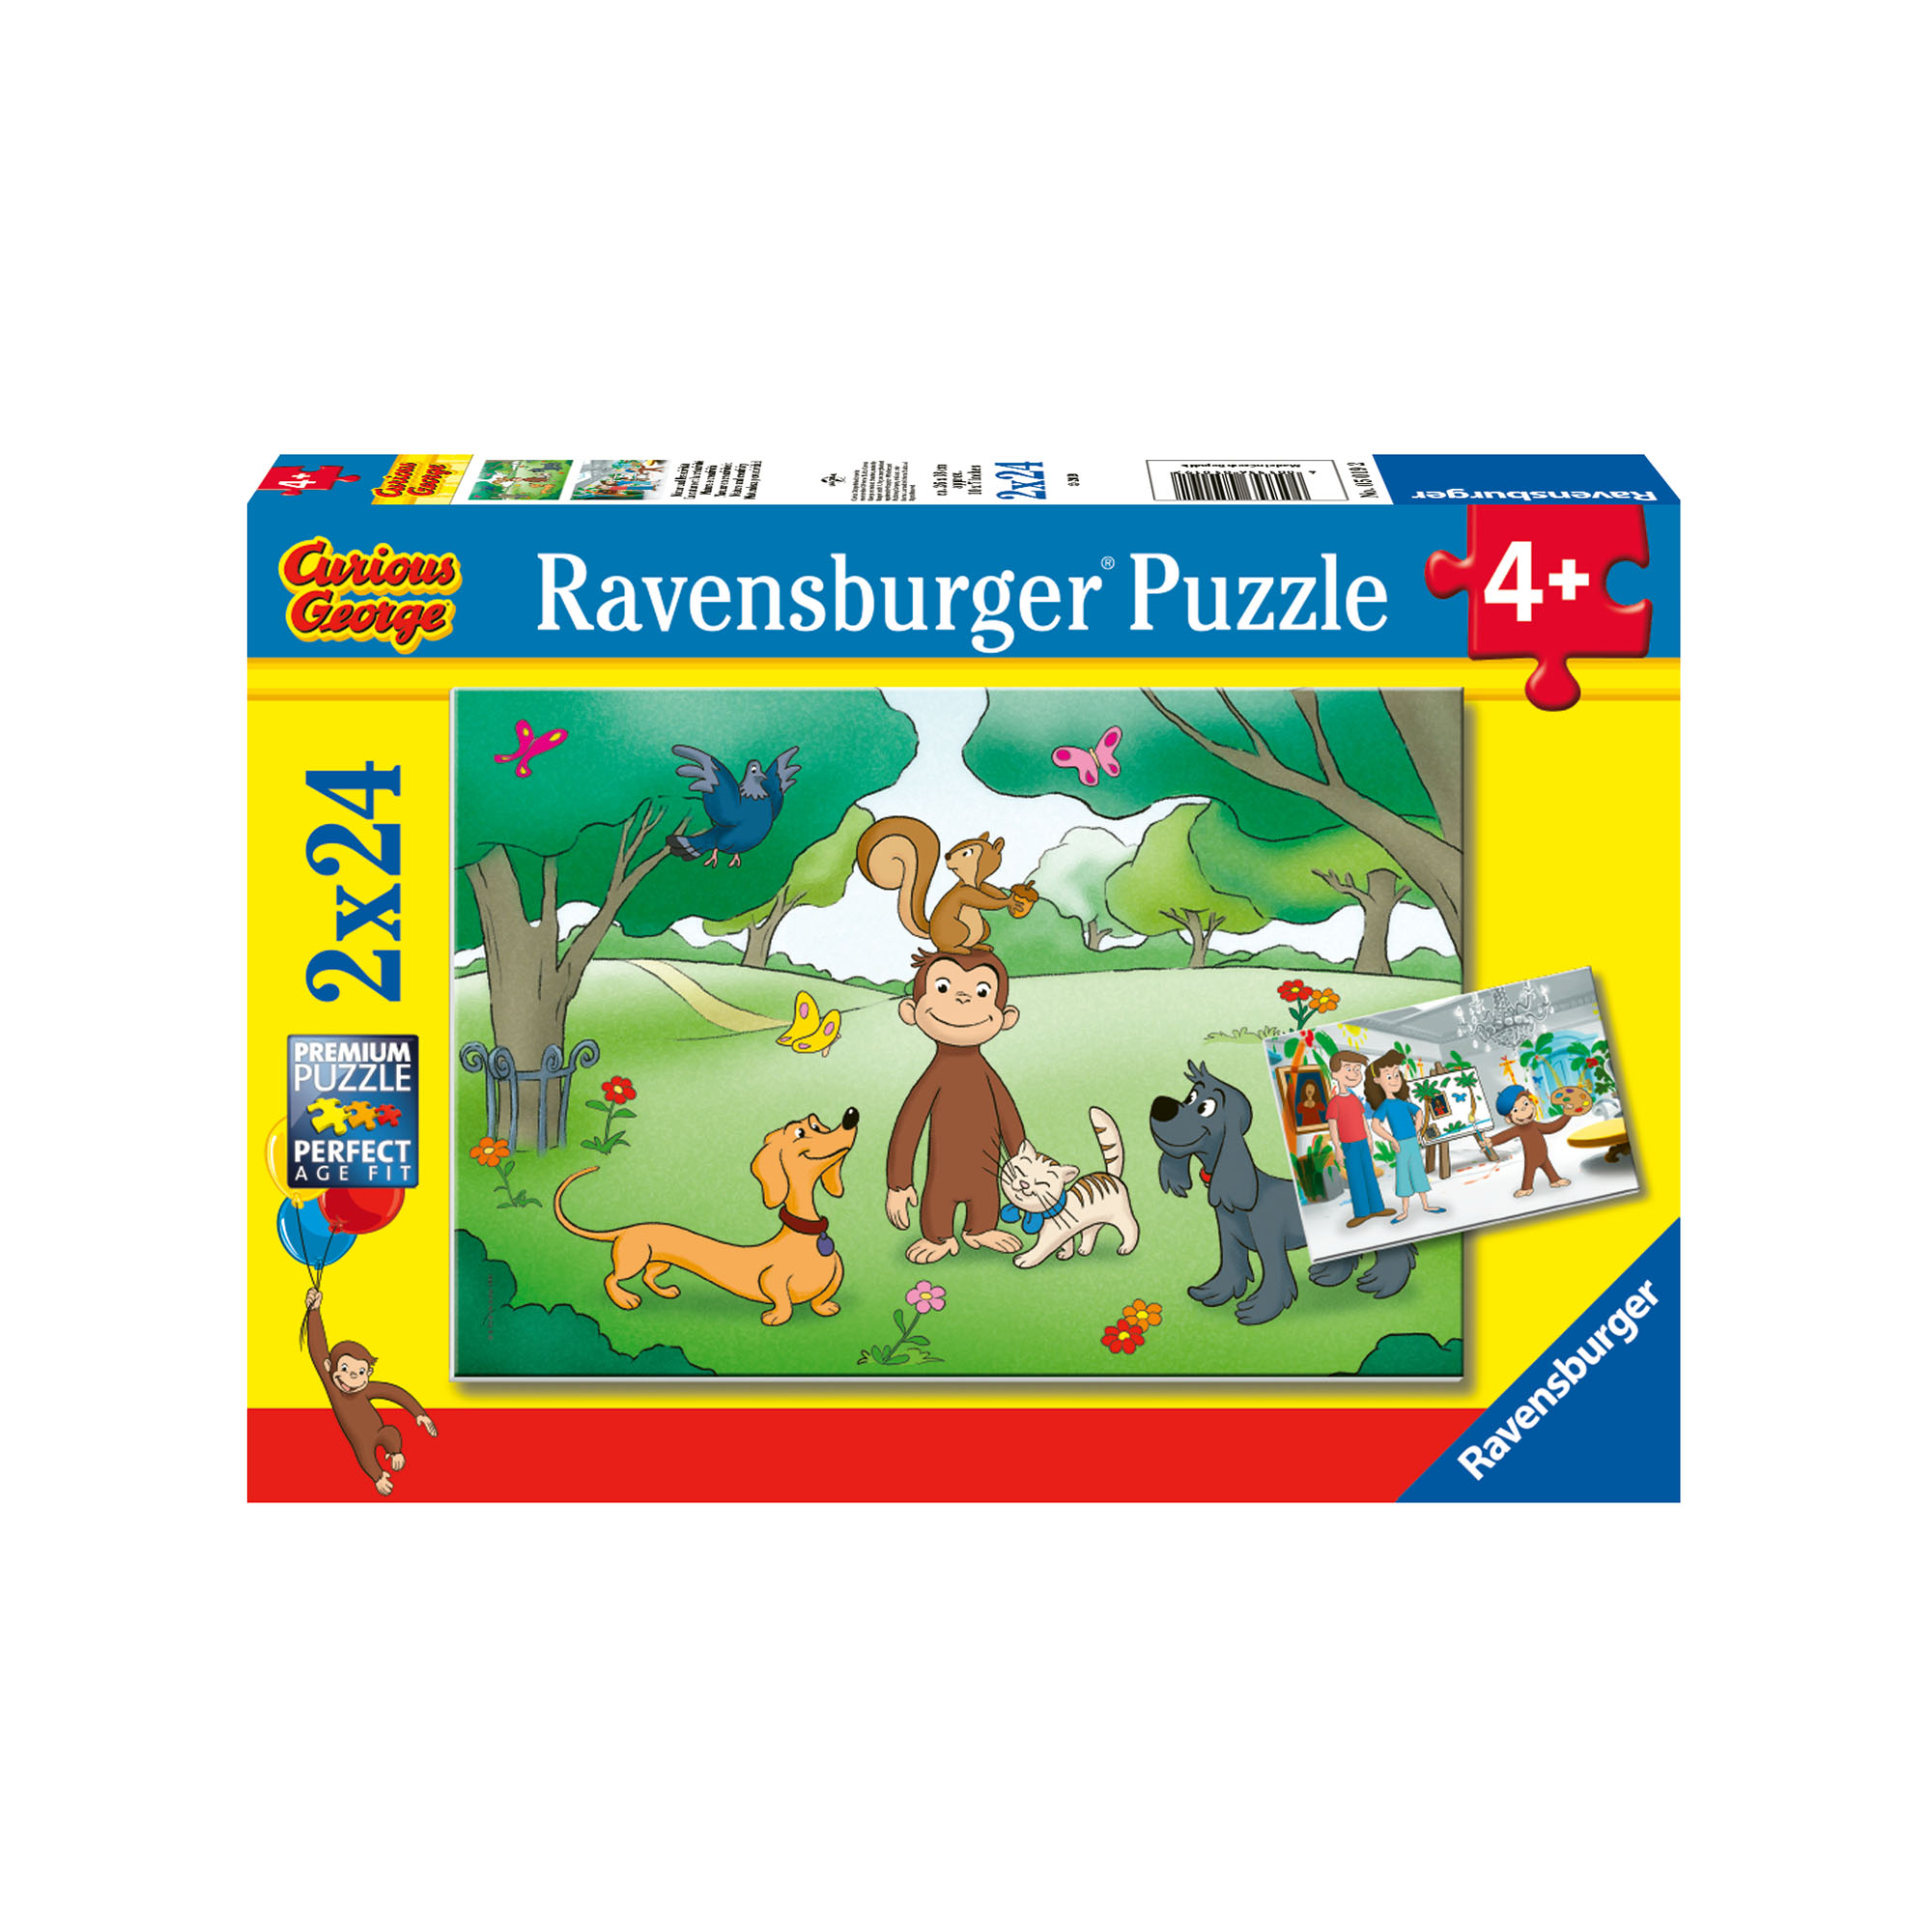 Ravensburger Puzzle 2x24 pezzi 05019 - Curioso come George, , large